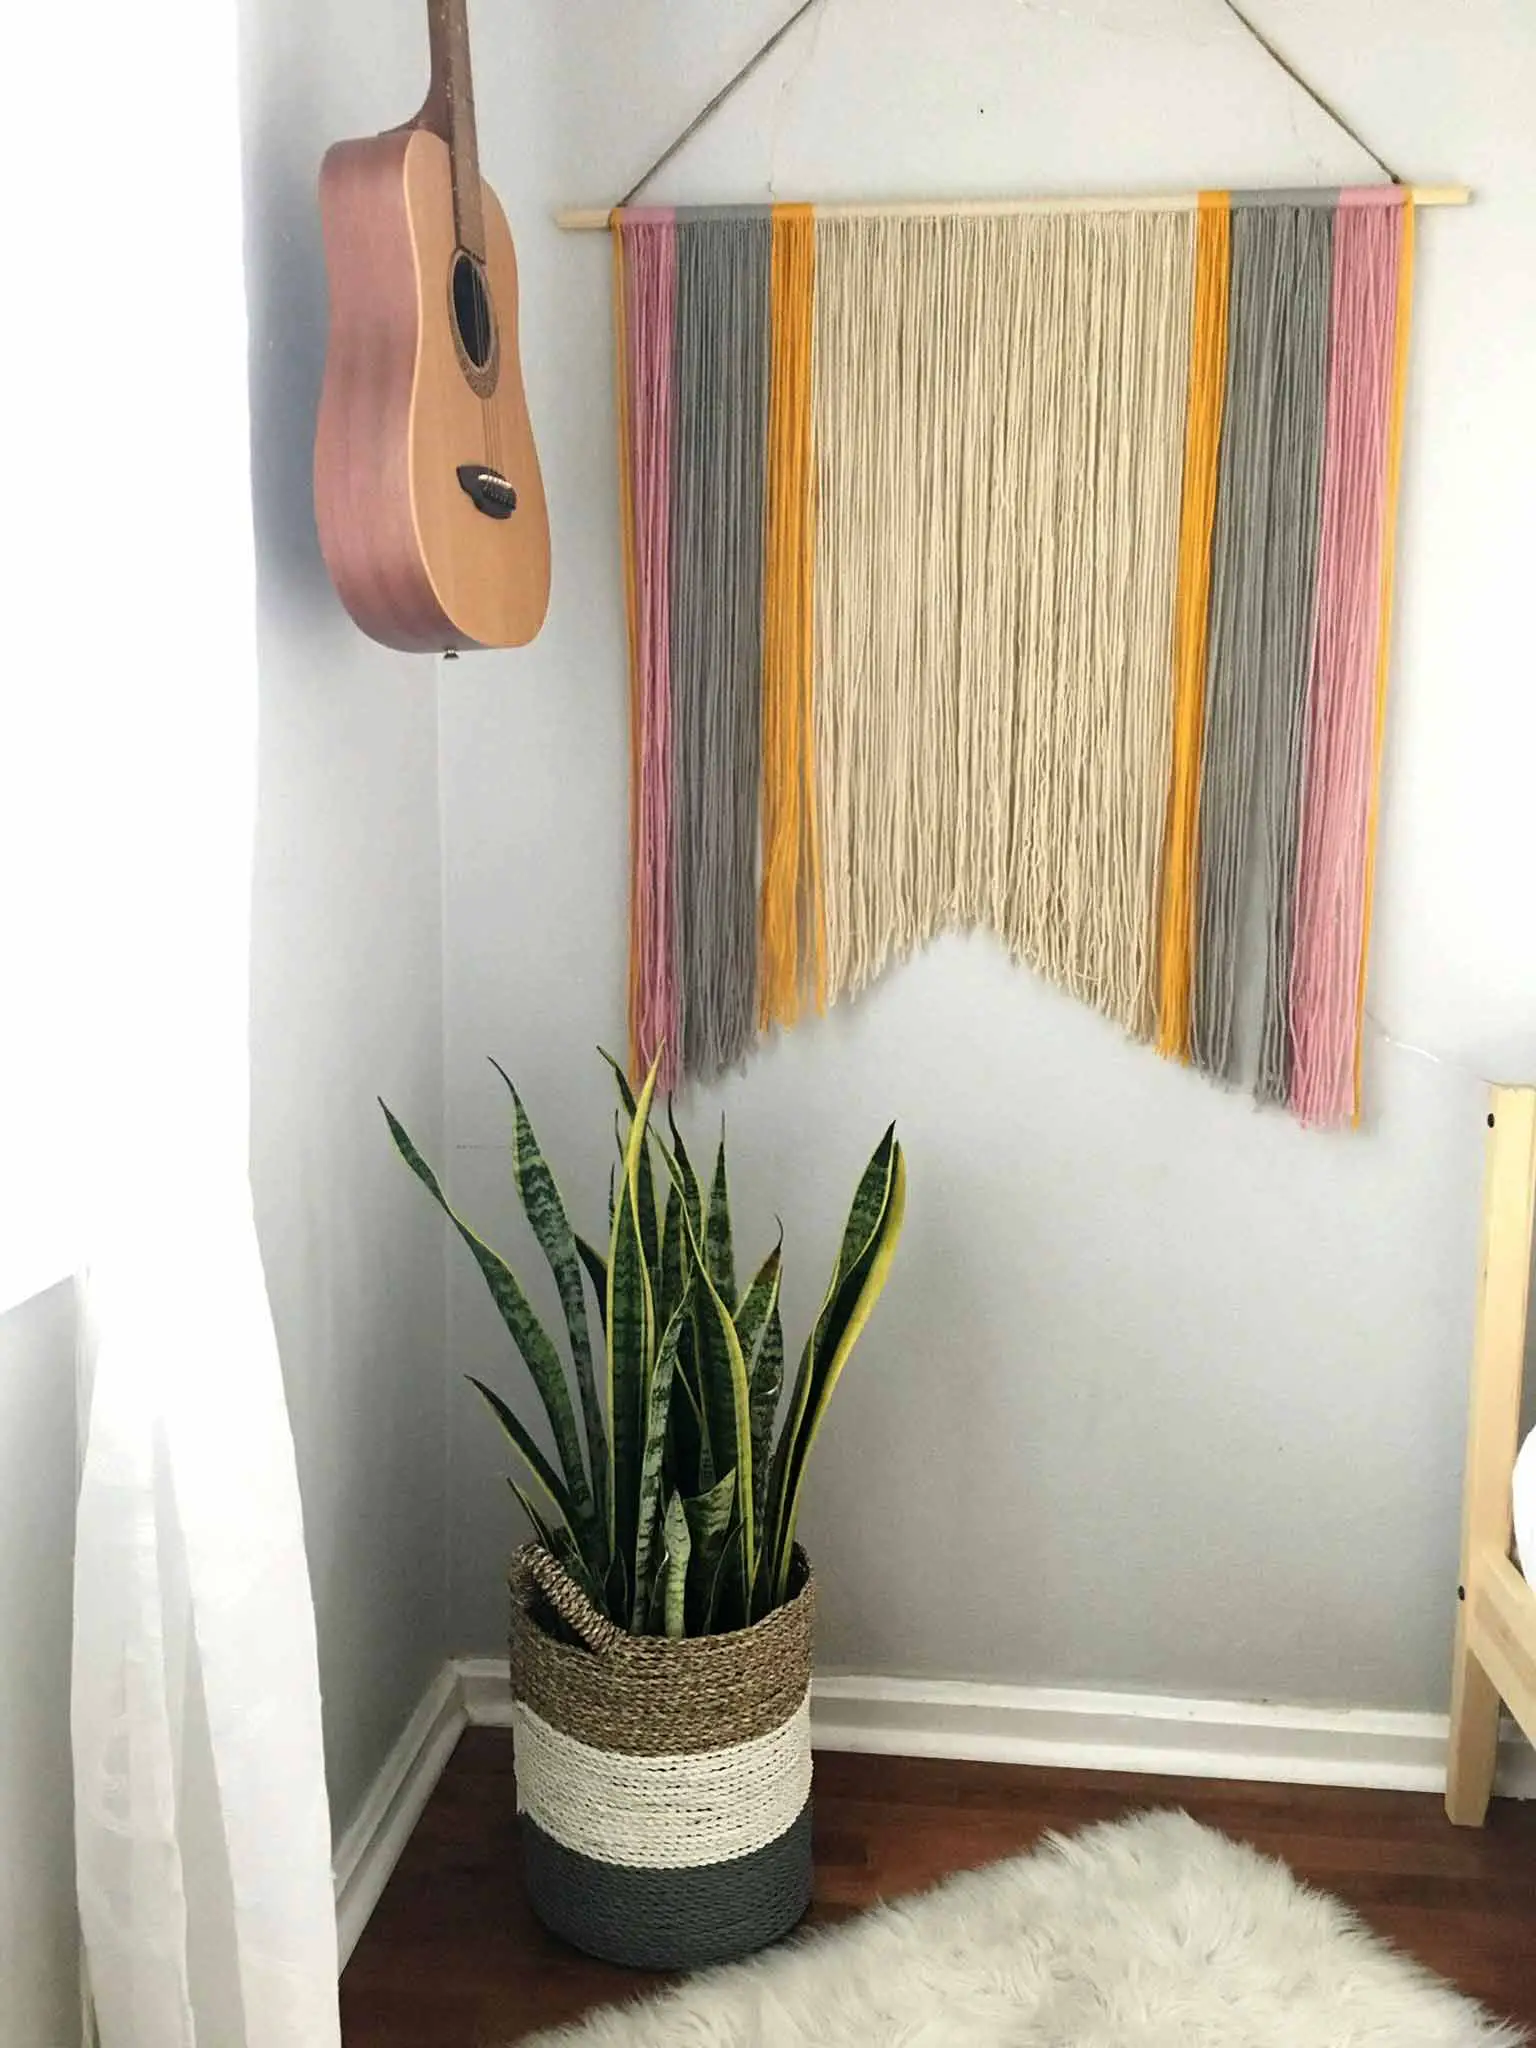 Yarn art and guitar hanging on the wall - modern boho tween bedroom - That Homebird Life Blog